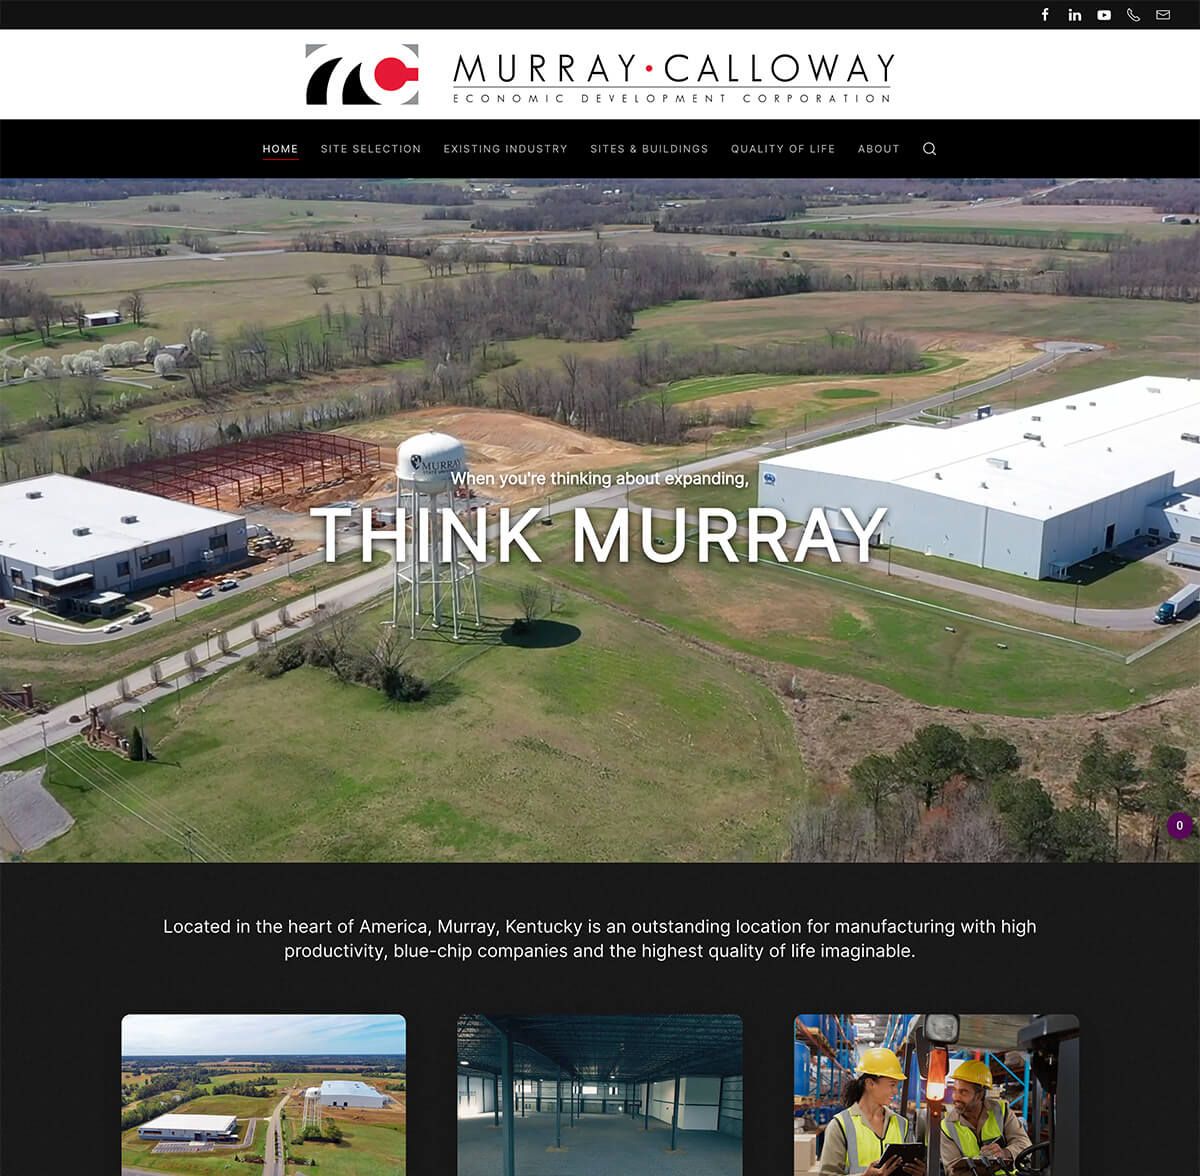 Murray-Calloway Economic Development Corporation